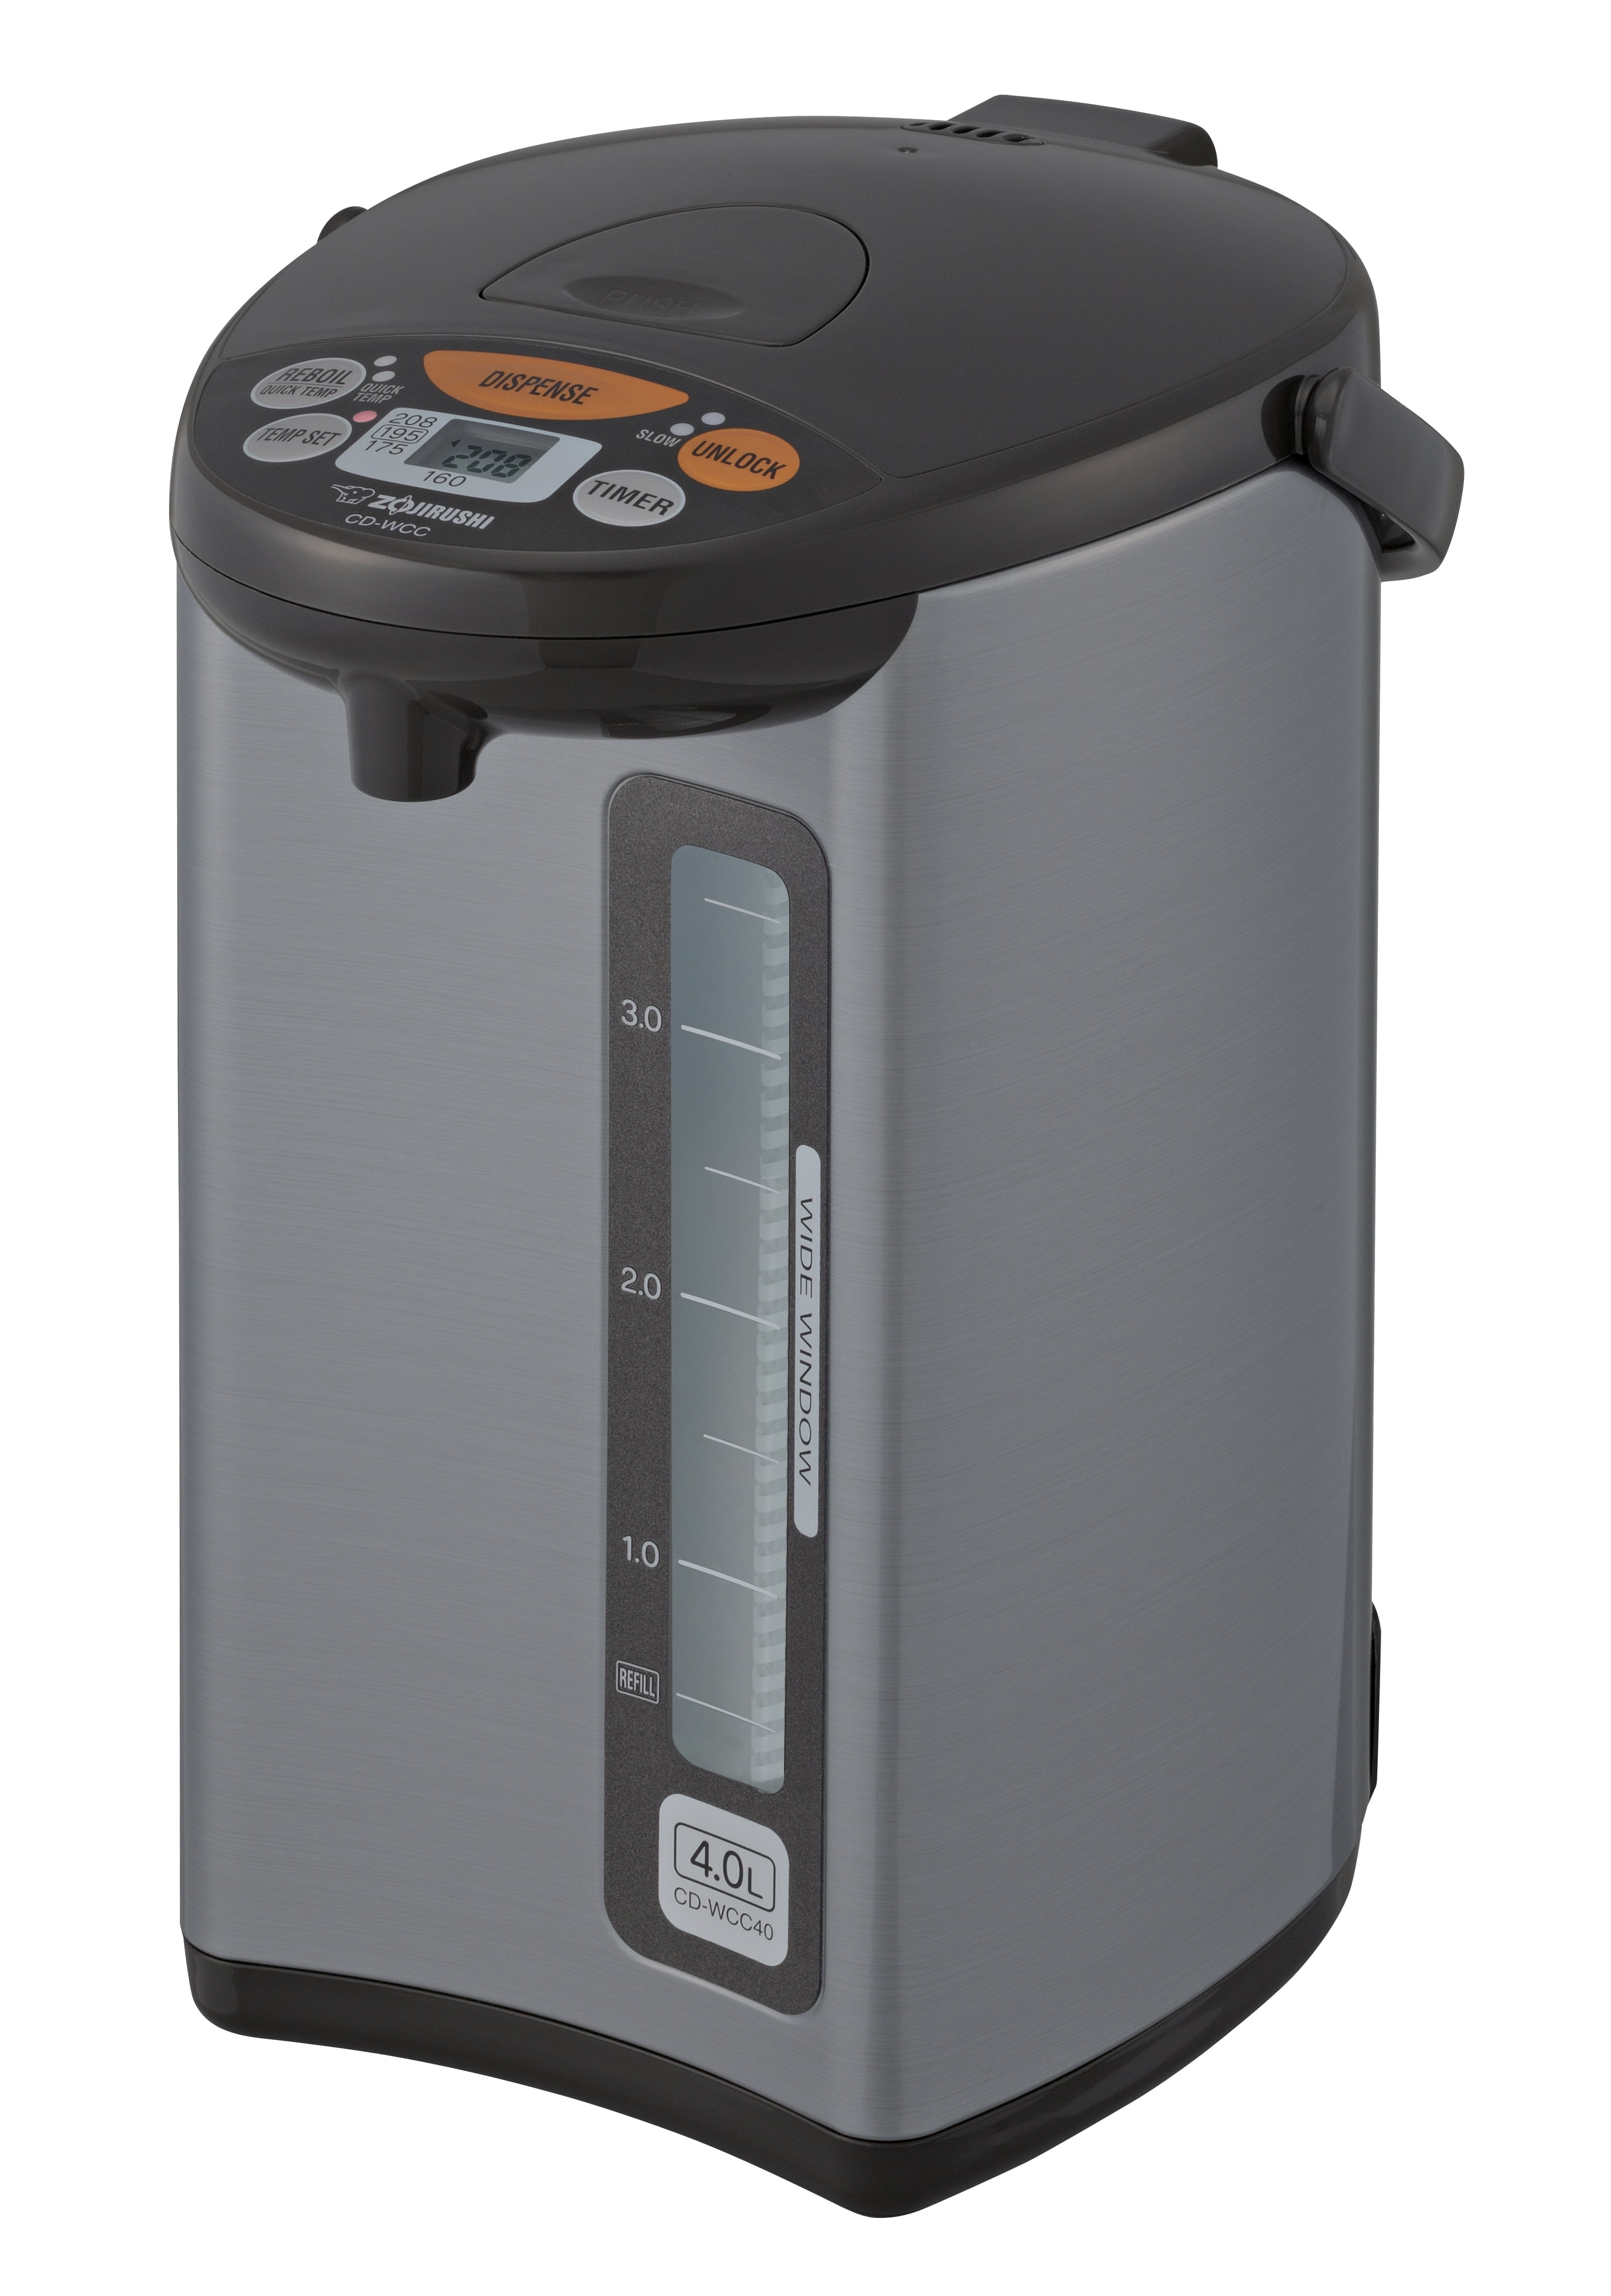 Zojirushi Micom Water Boiler & Warmer, 3.0 Liter, Silver Dark Brown